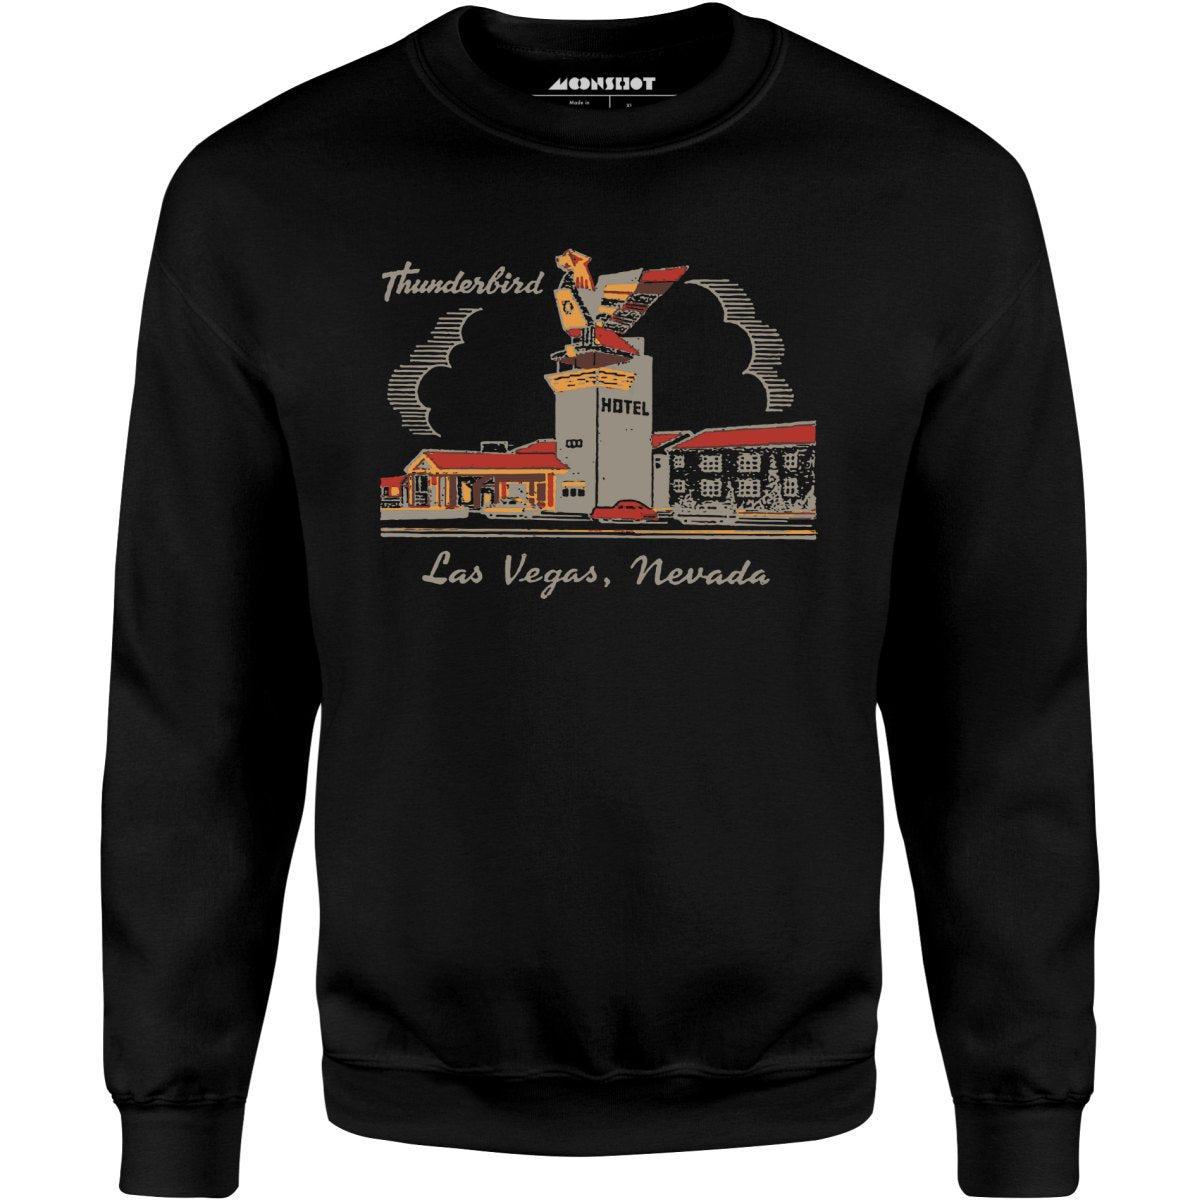 Thunderbird Hotel v2 - Vintage Las Vegas - Unisex Sweatshirt